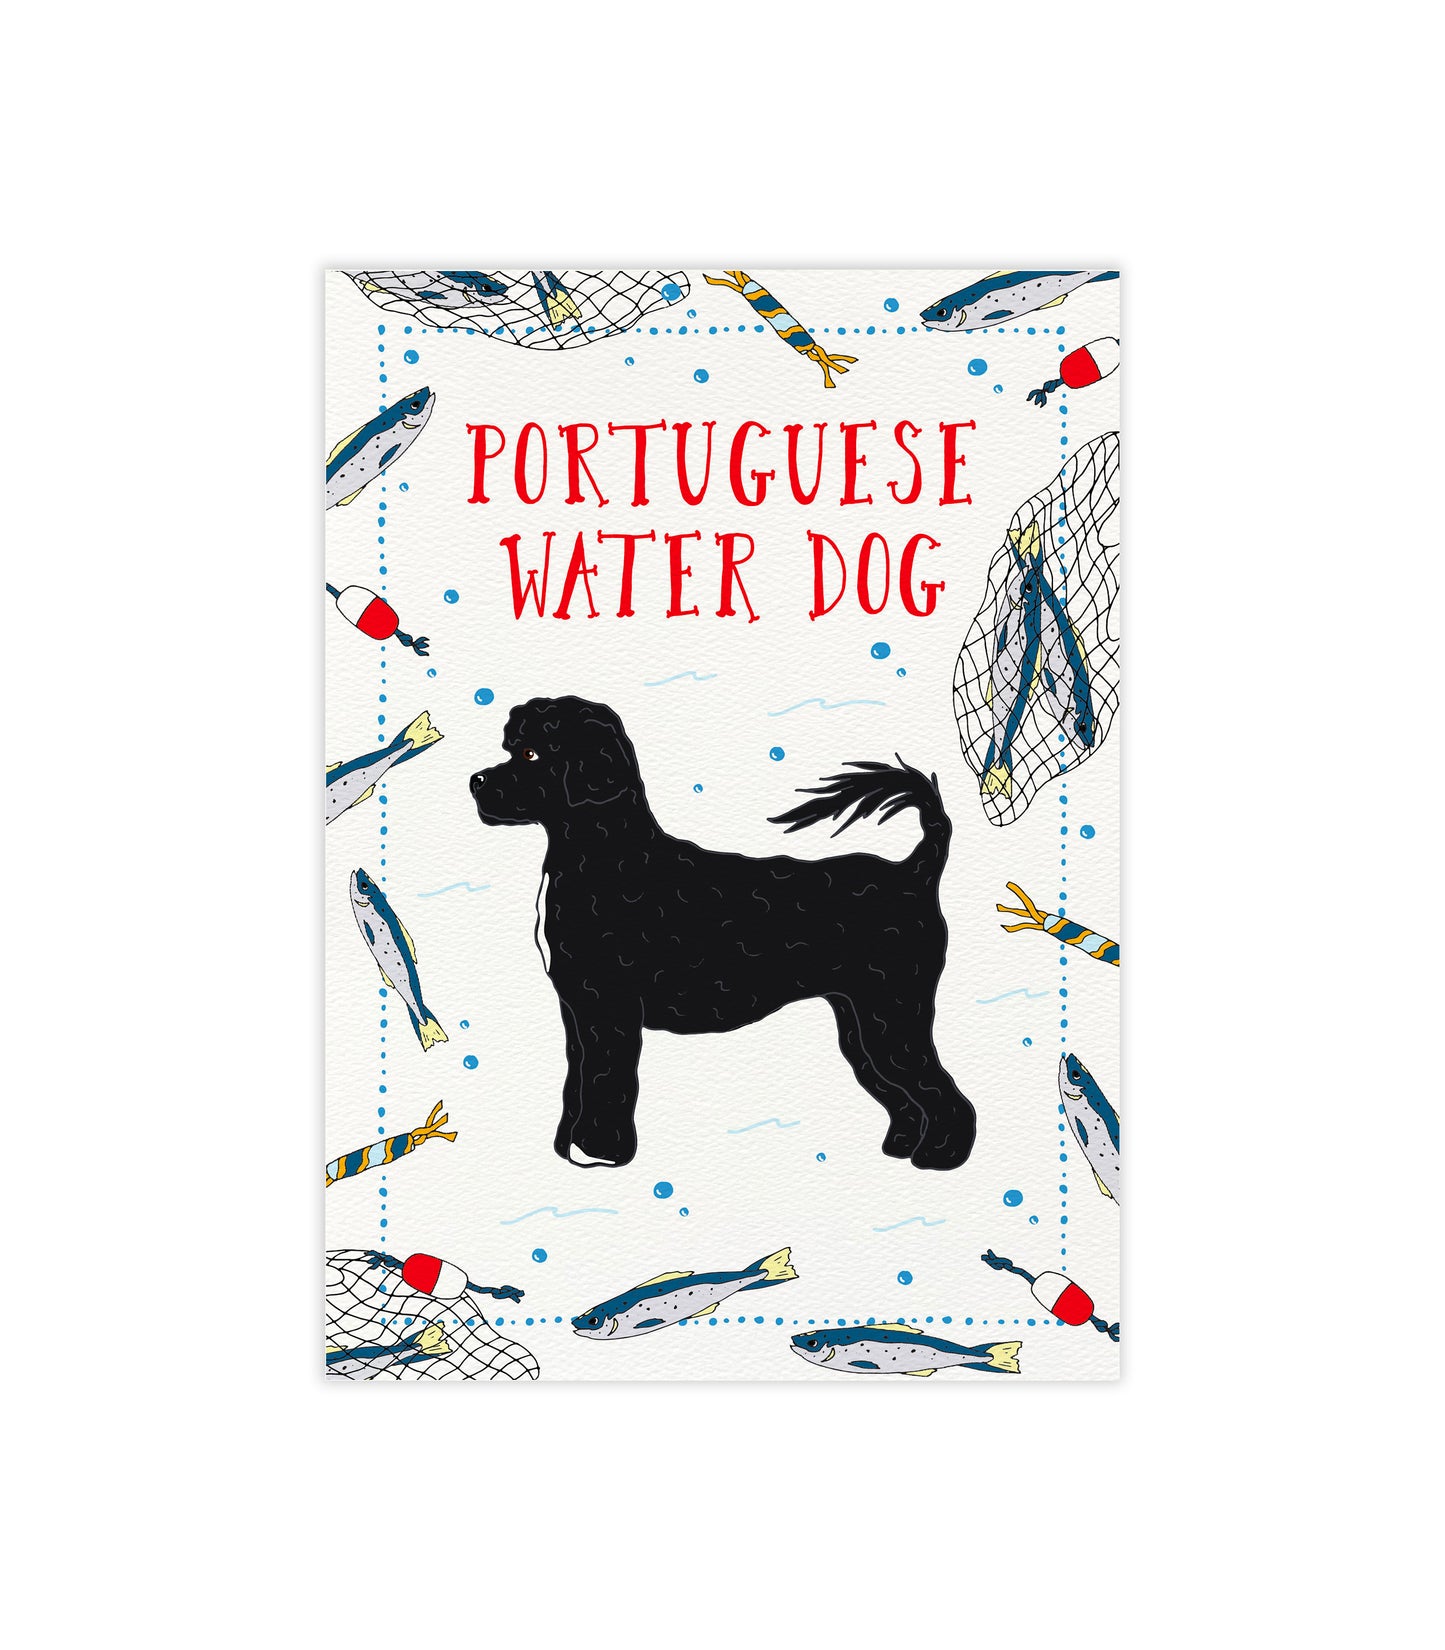 Portuguese Water Dog 5"x7" Illustrated Art Print